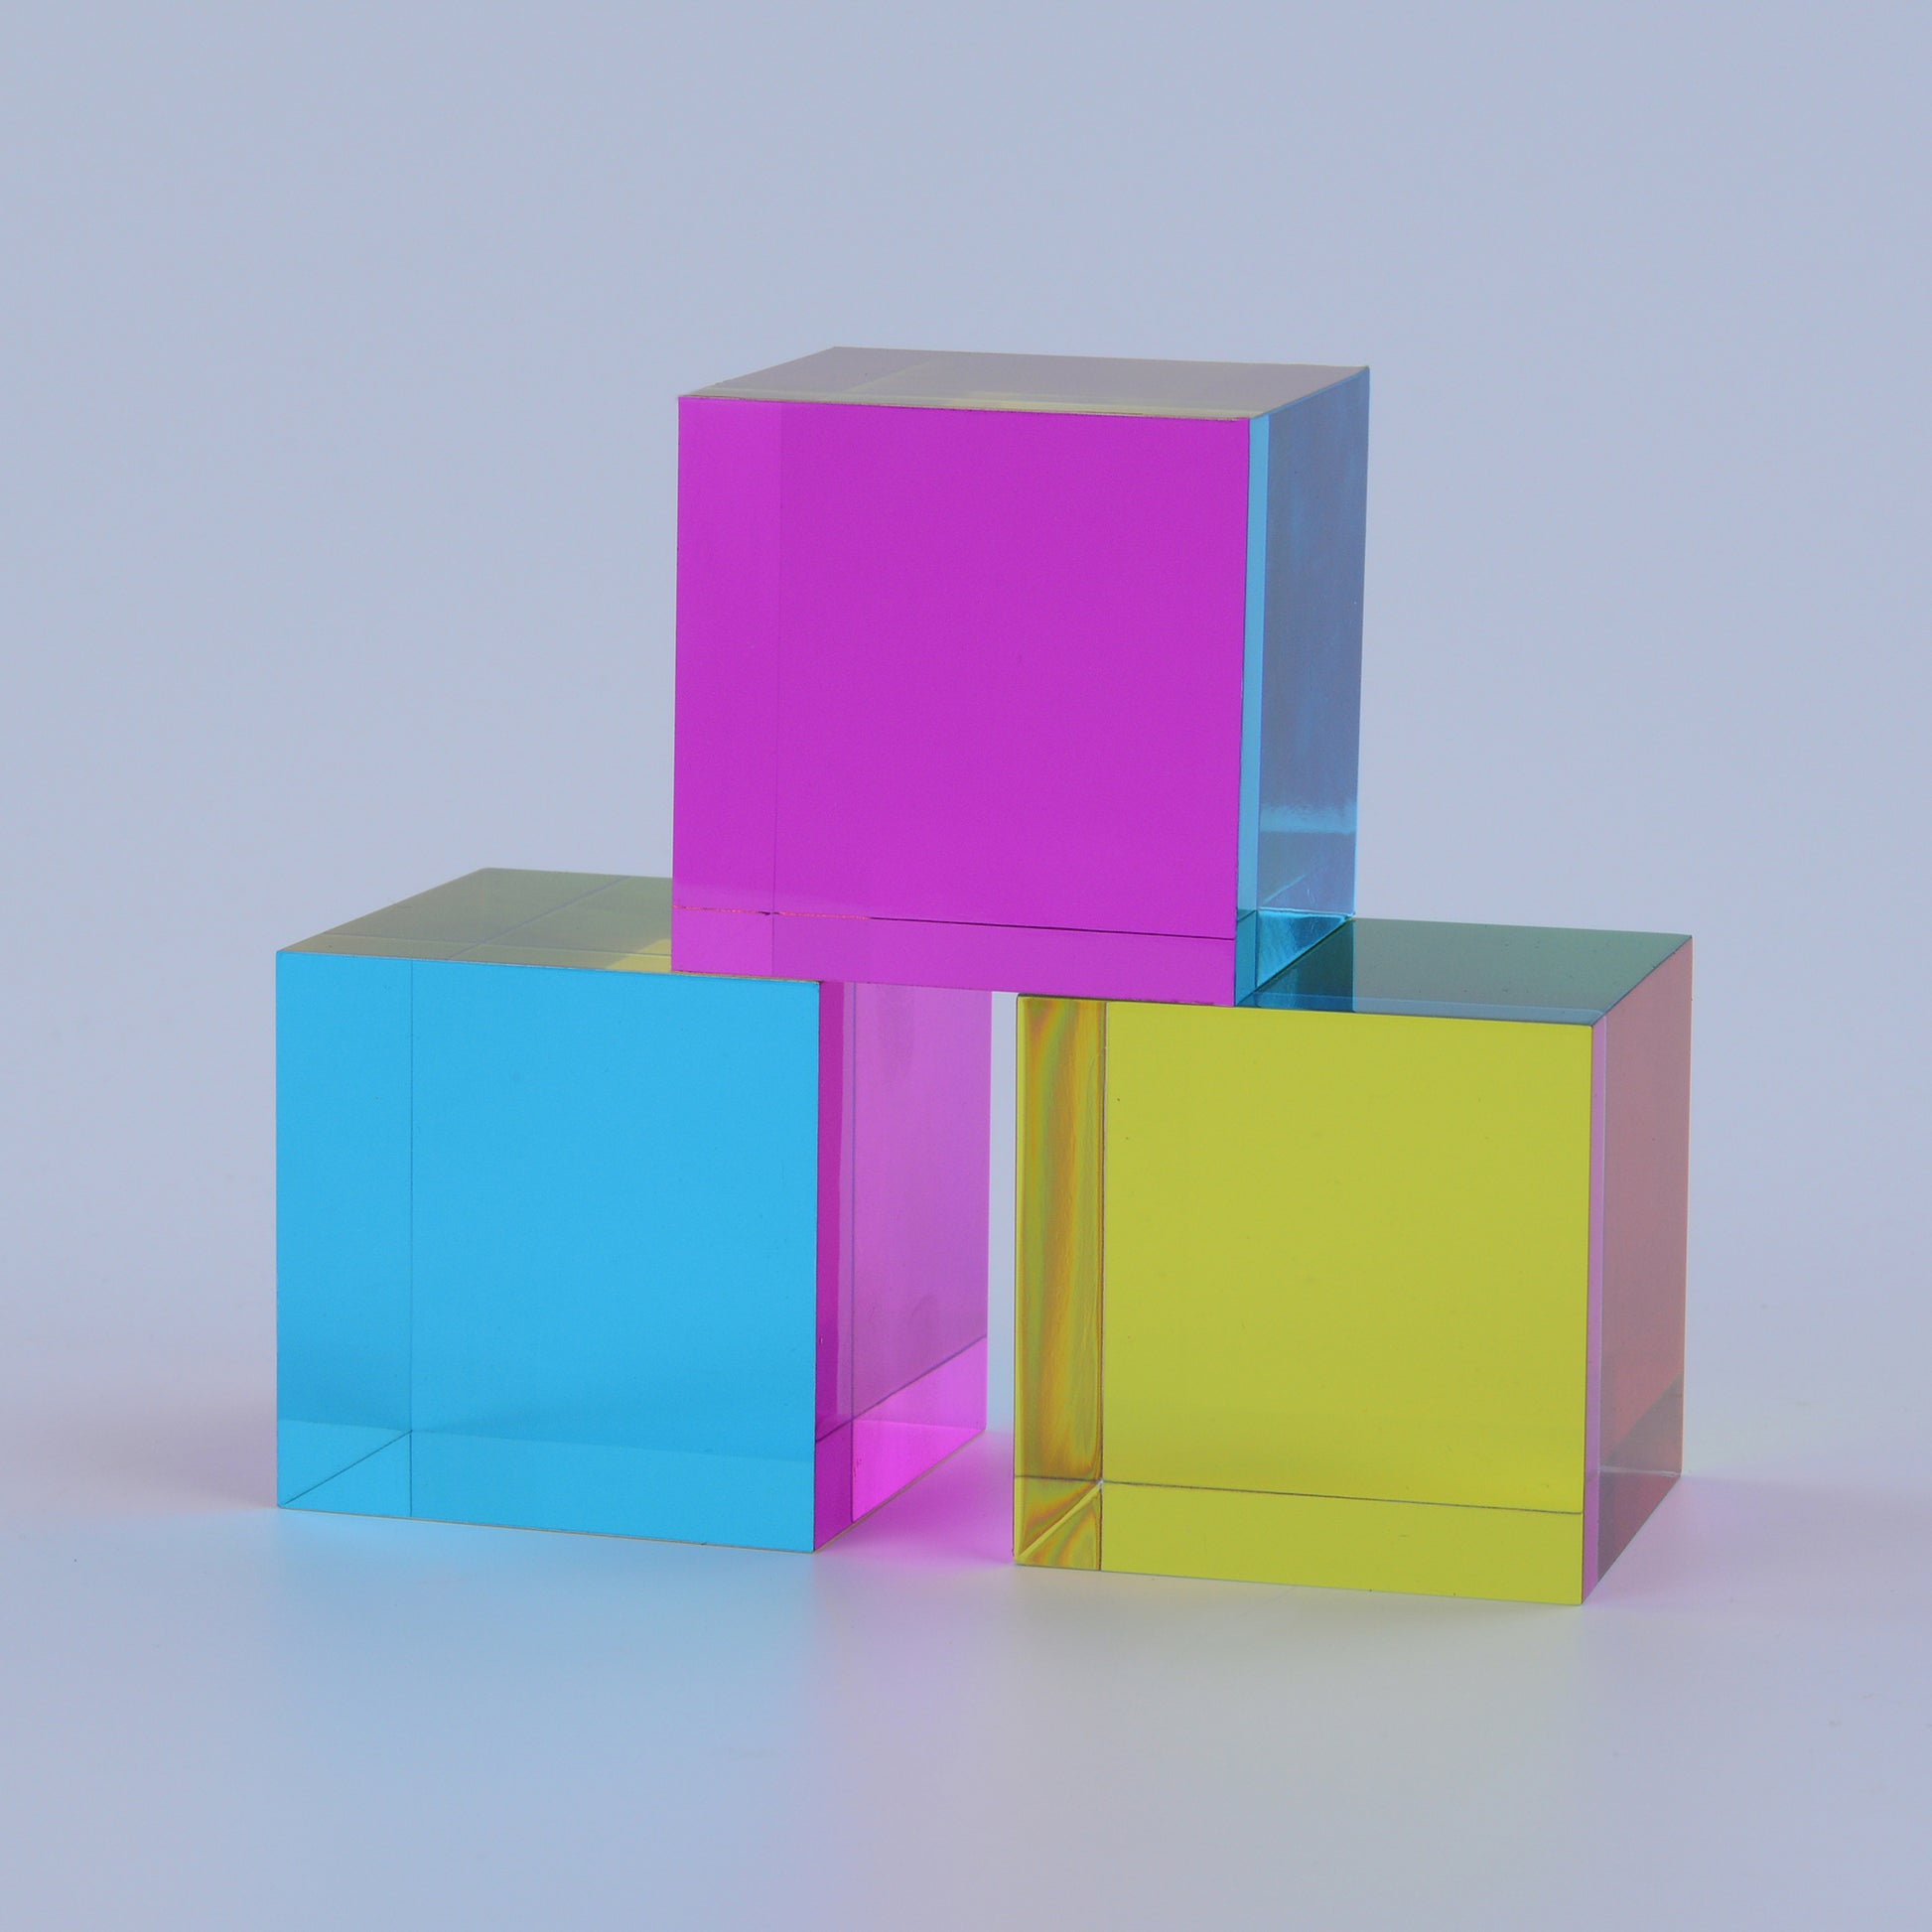 The Original Cube – CMY Cubes